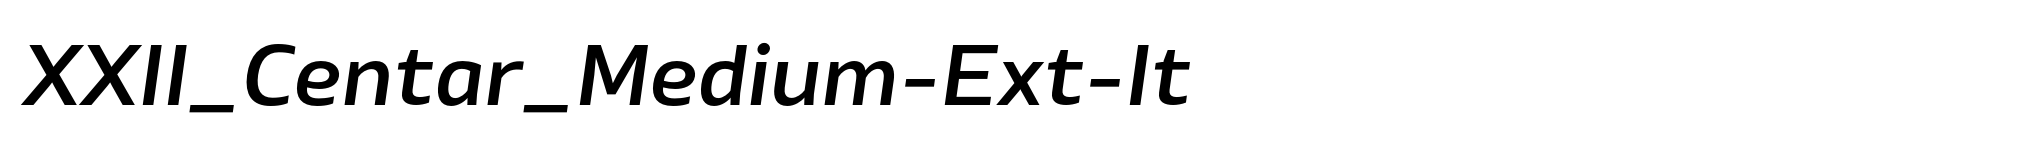 XXII_Centar_Medium-Ext-It image